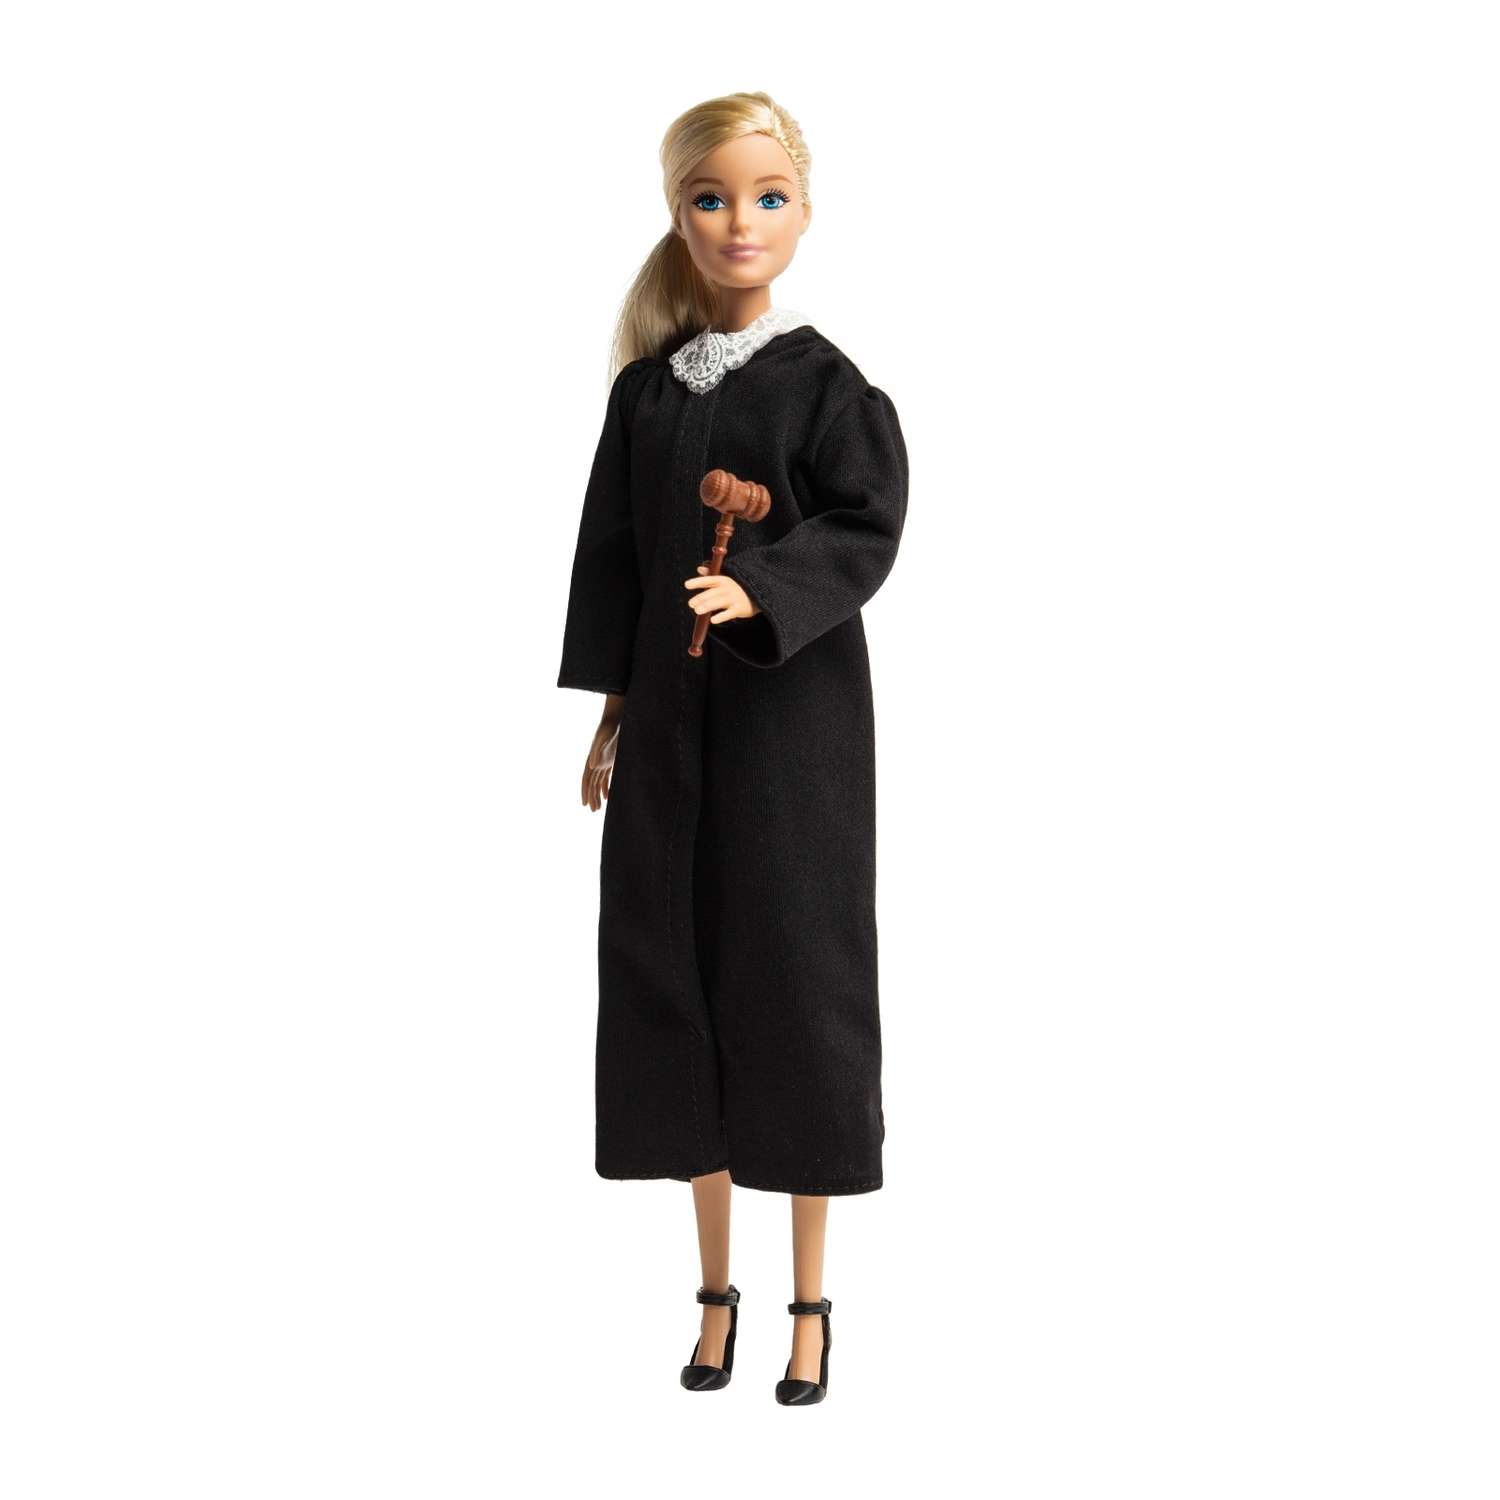 Кукла Barbie Карьера года Судья FXP42 FXP42 - фото 1